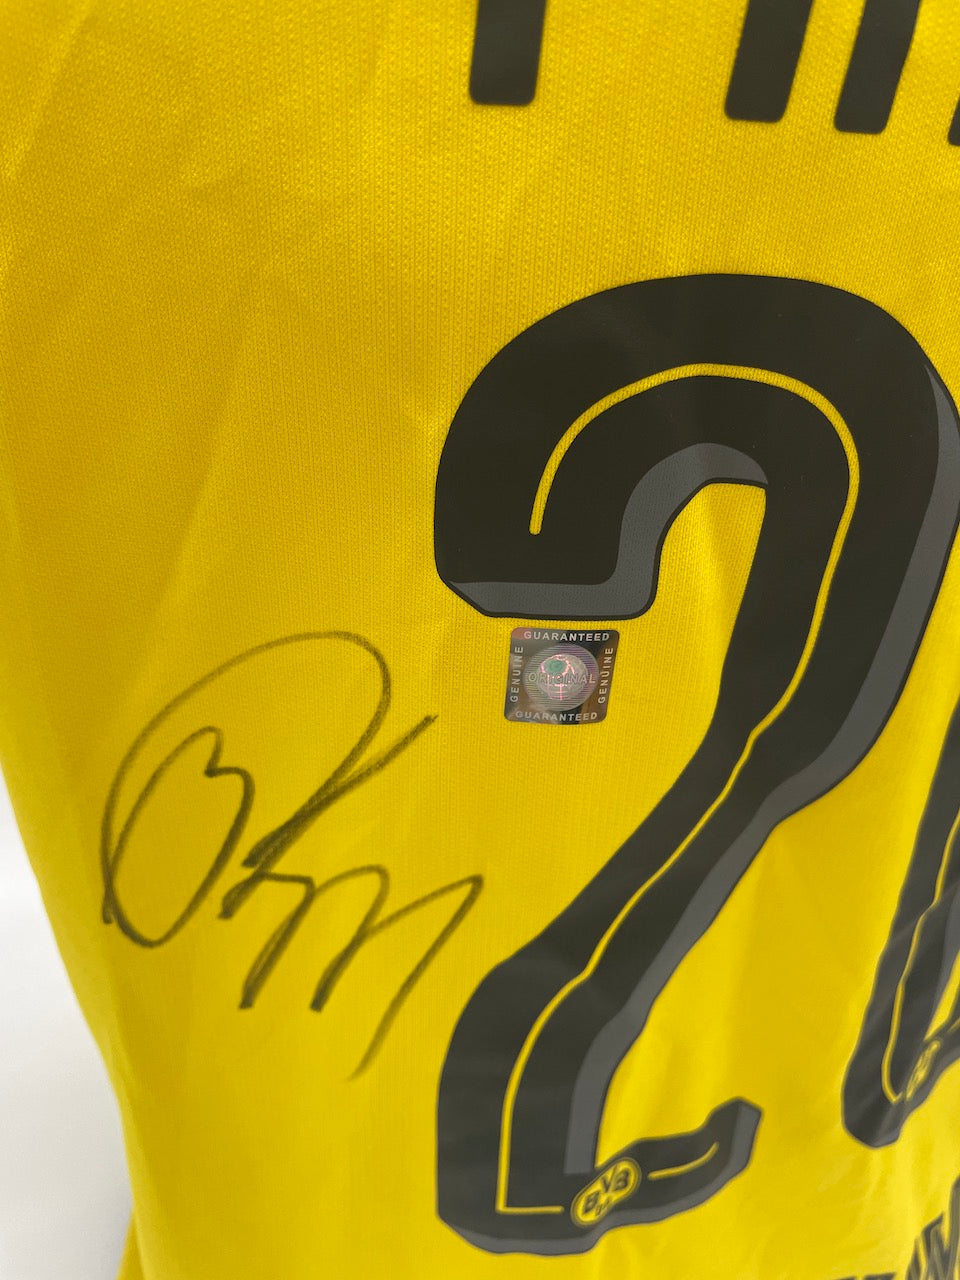 Borussia Dortmund Trikot Philipp signiert BVB Autogramm Fußball Puma Neu COA L